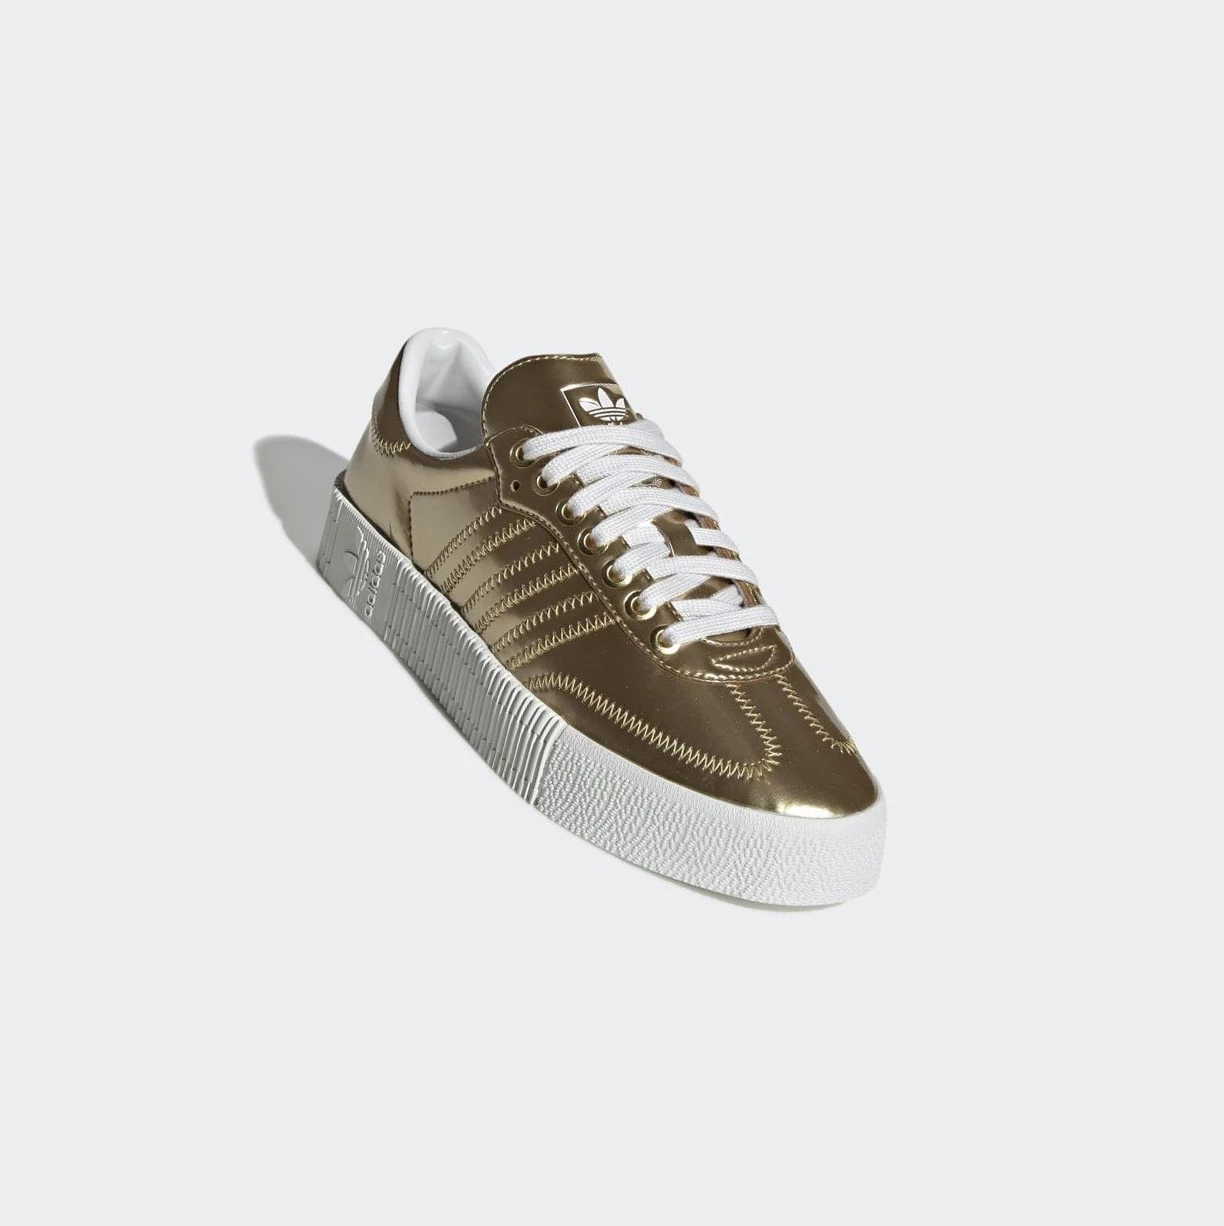 Originálne Topánky Adidas SAMBAROSE Damske Zlate | 574SKOQLJPV